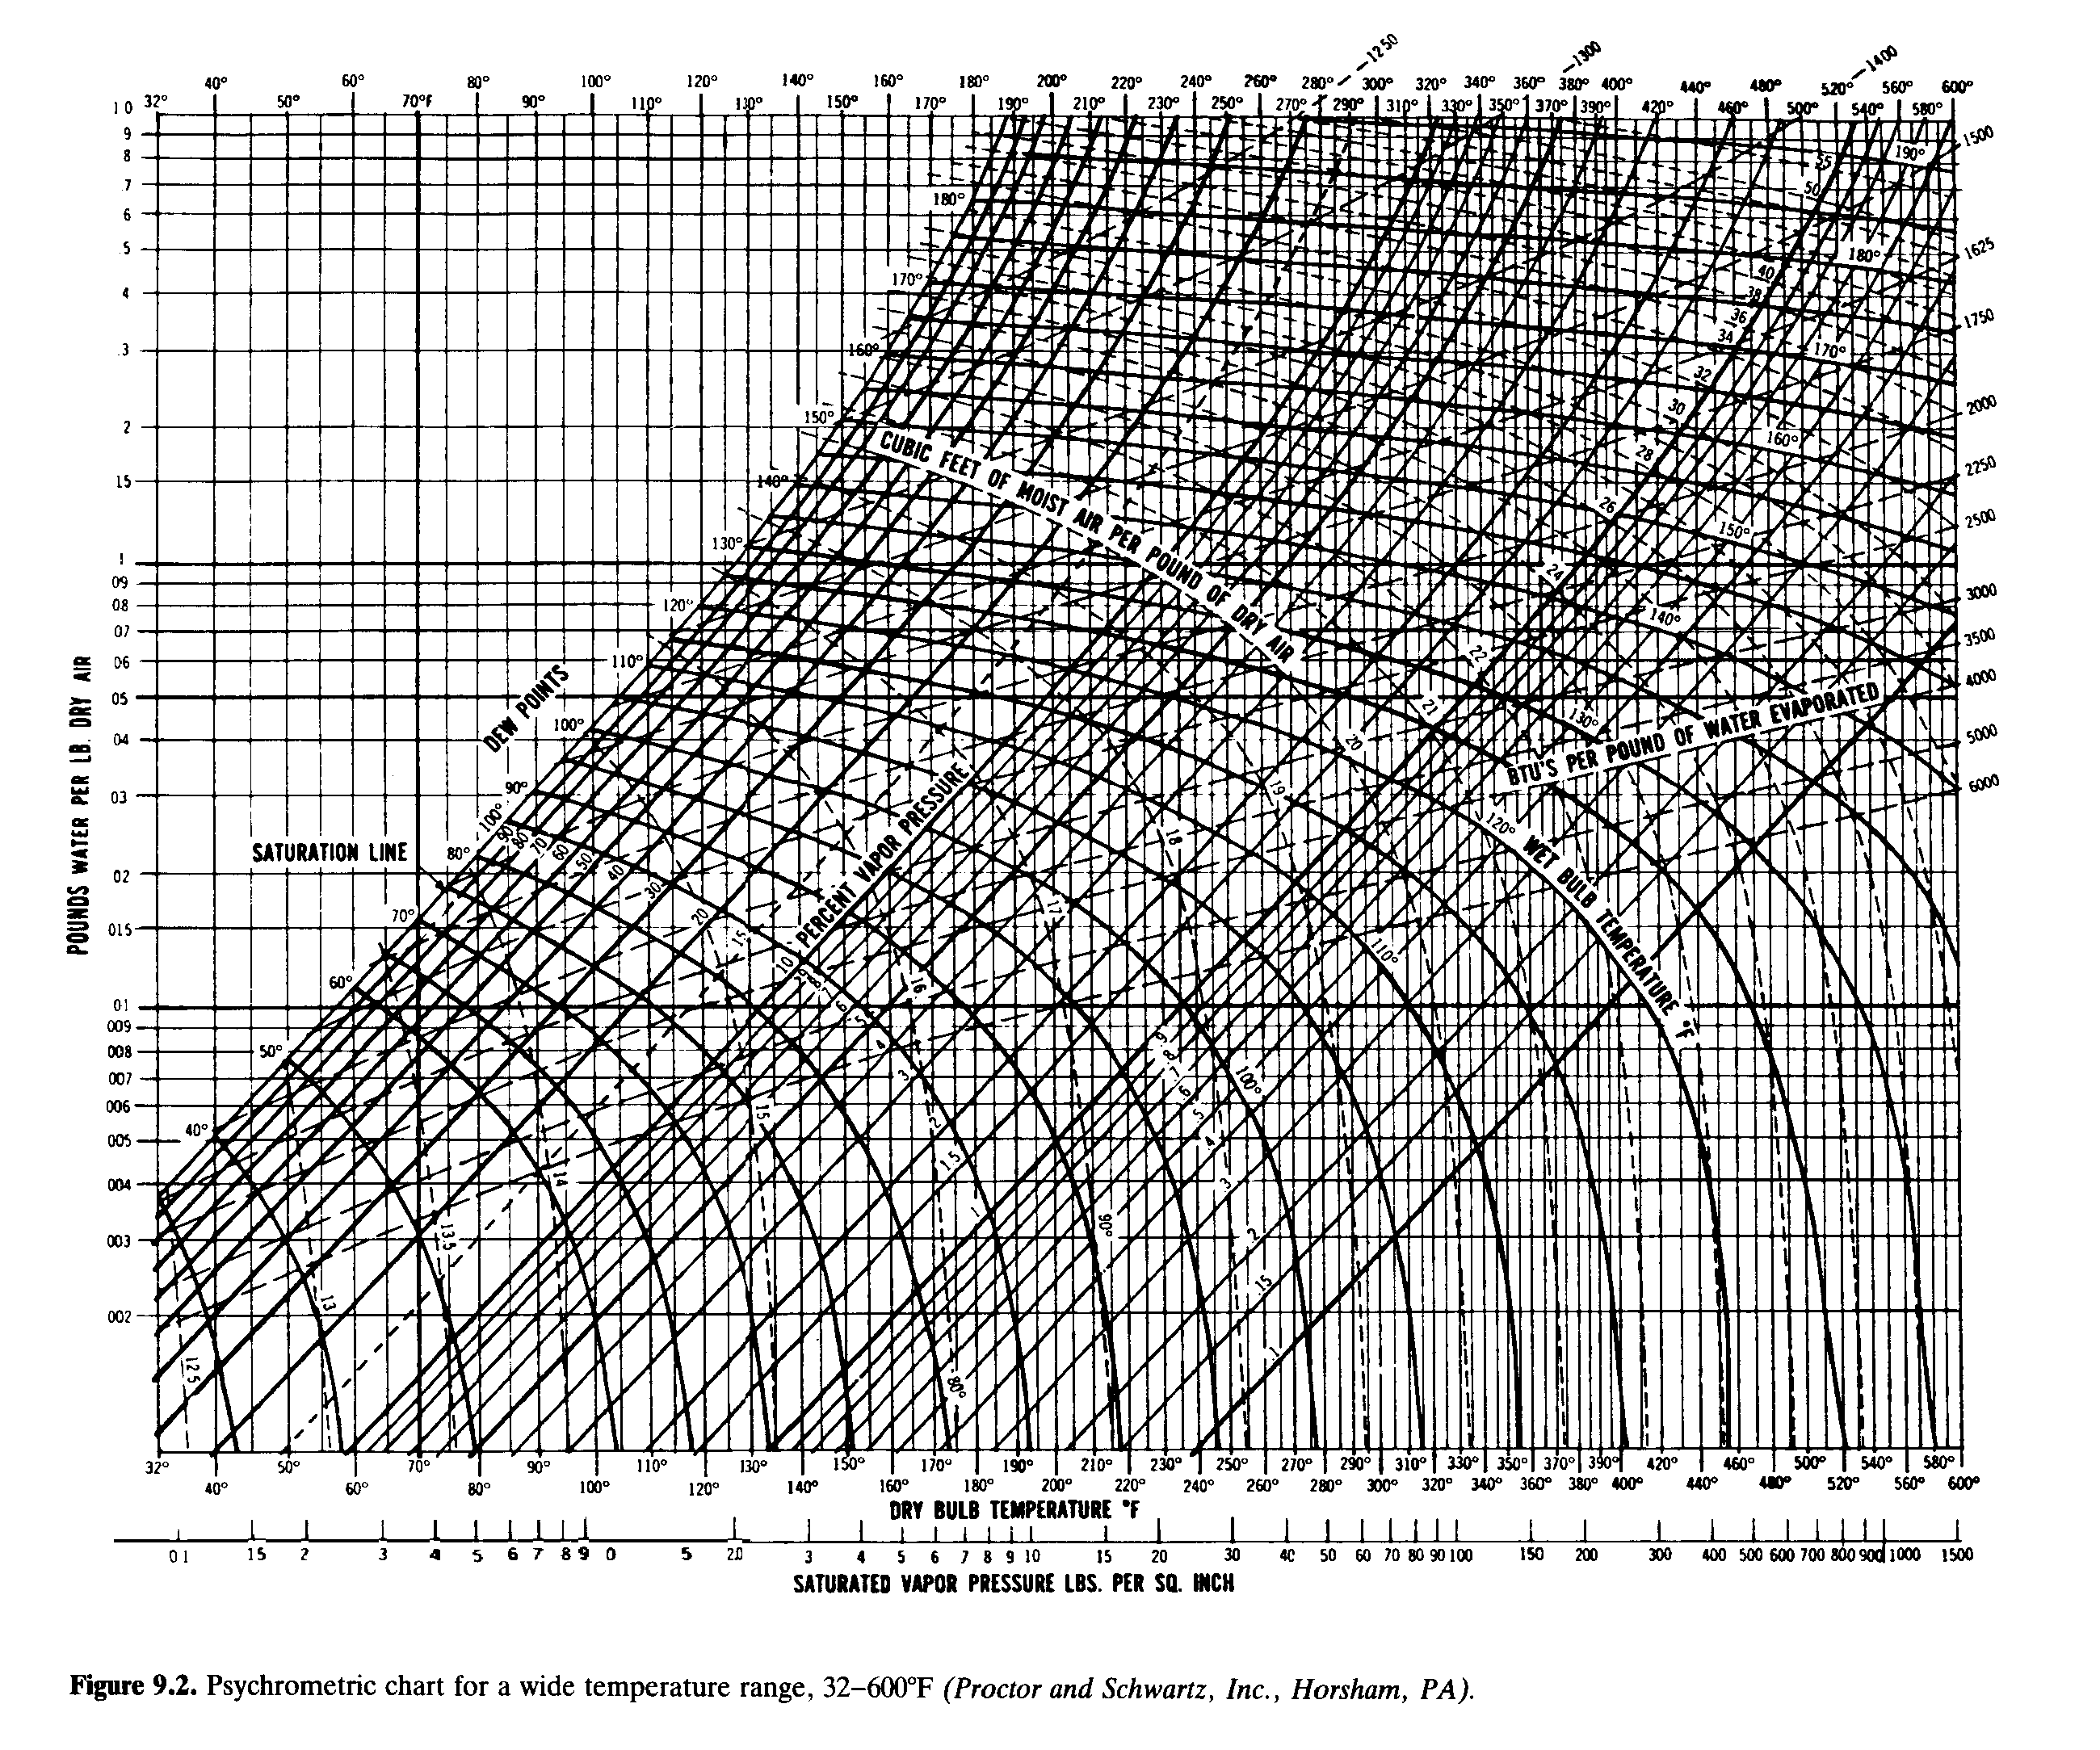 Figure 9.2. Psychrometric chart for a wide temperature range, 32-600T (Proctor and Schwartz, Inc., Horsham, PA).